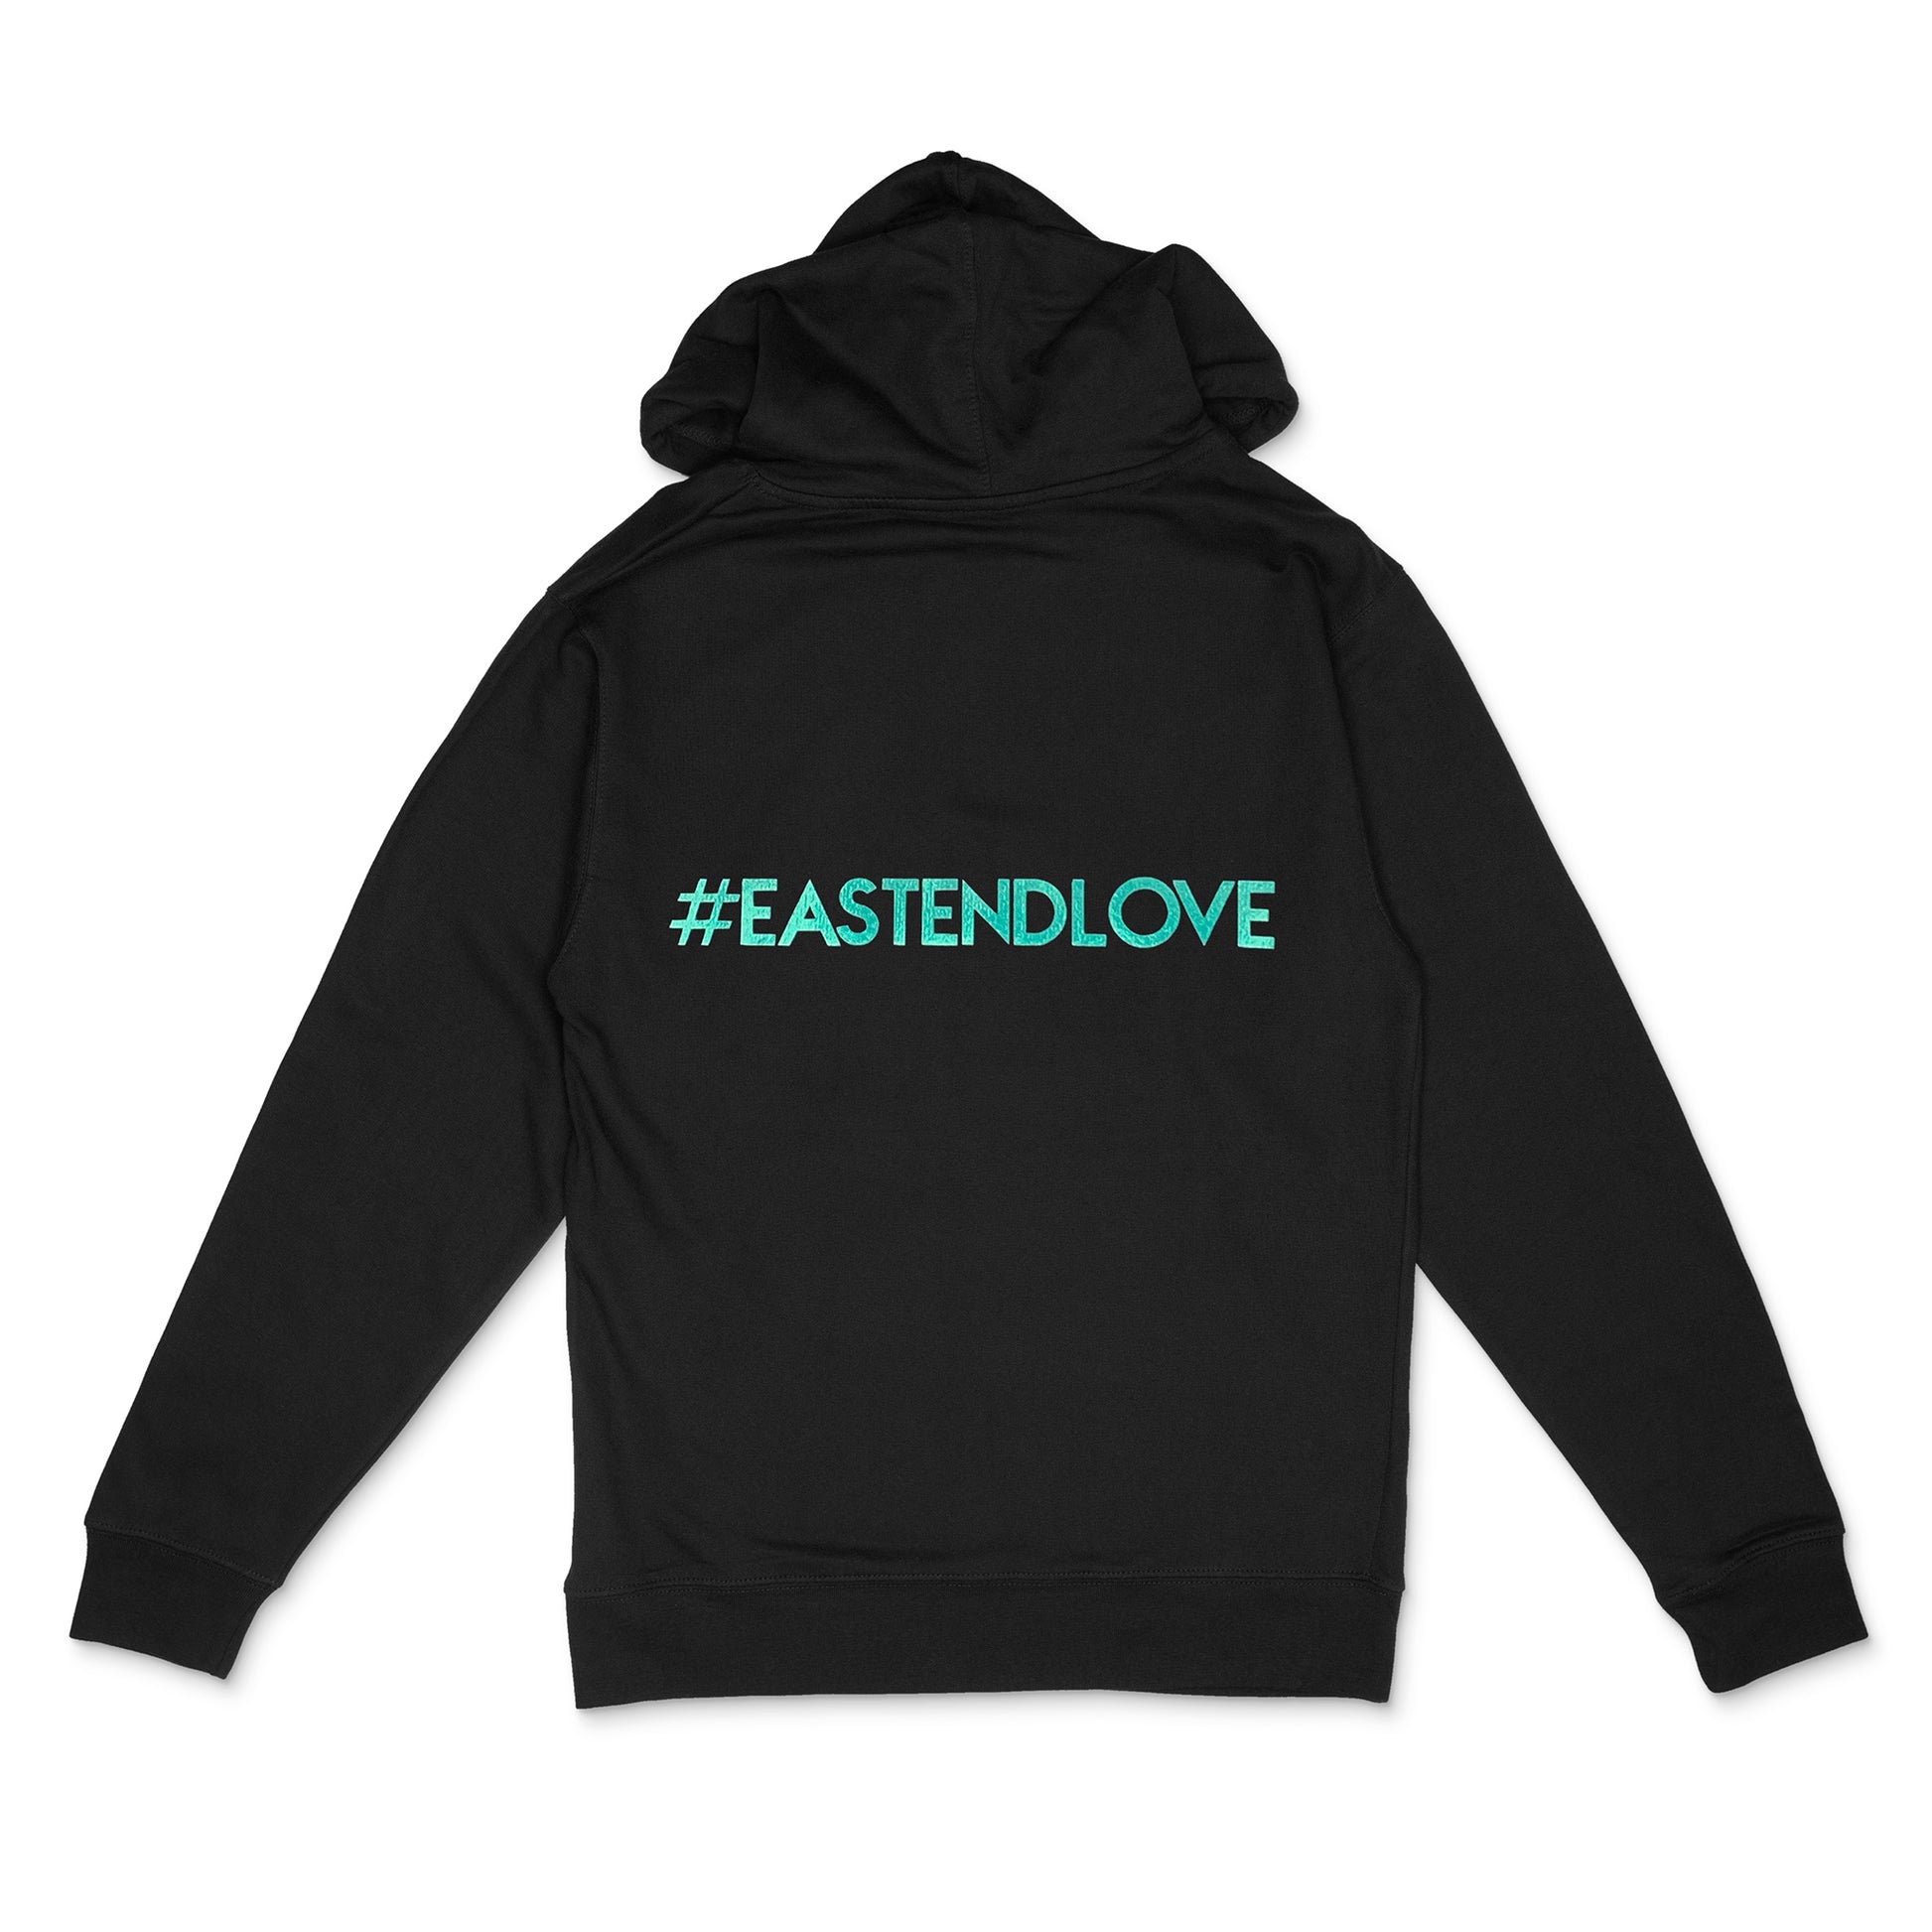 Black zip-up hoodie sweatshirt with metallic teal #EastEndLove text - back - by BBJ with East End Arts